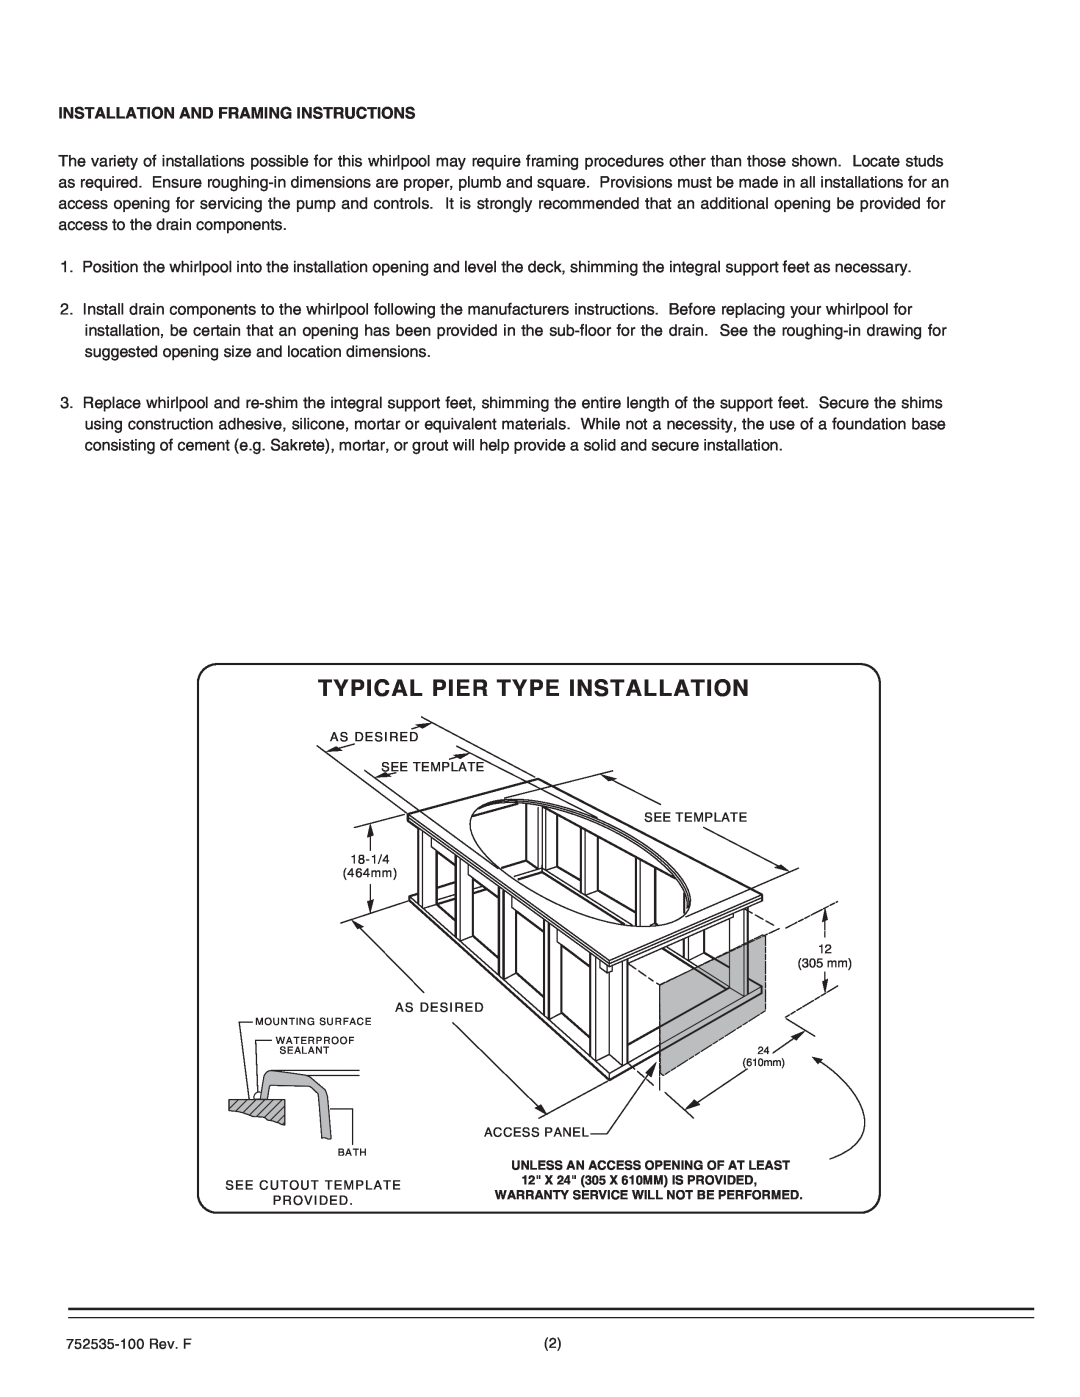 American Standard 2908.XXXW installation instructions Typical Pier Type Installation, Installation And Framing Instructions 